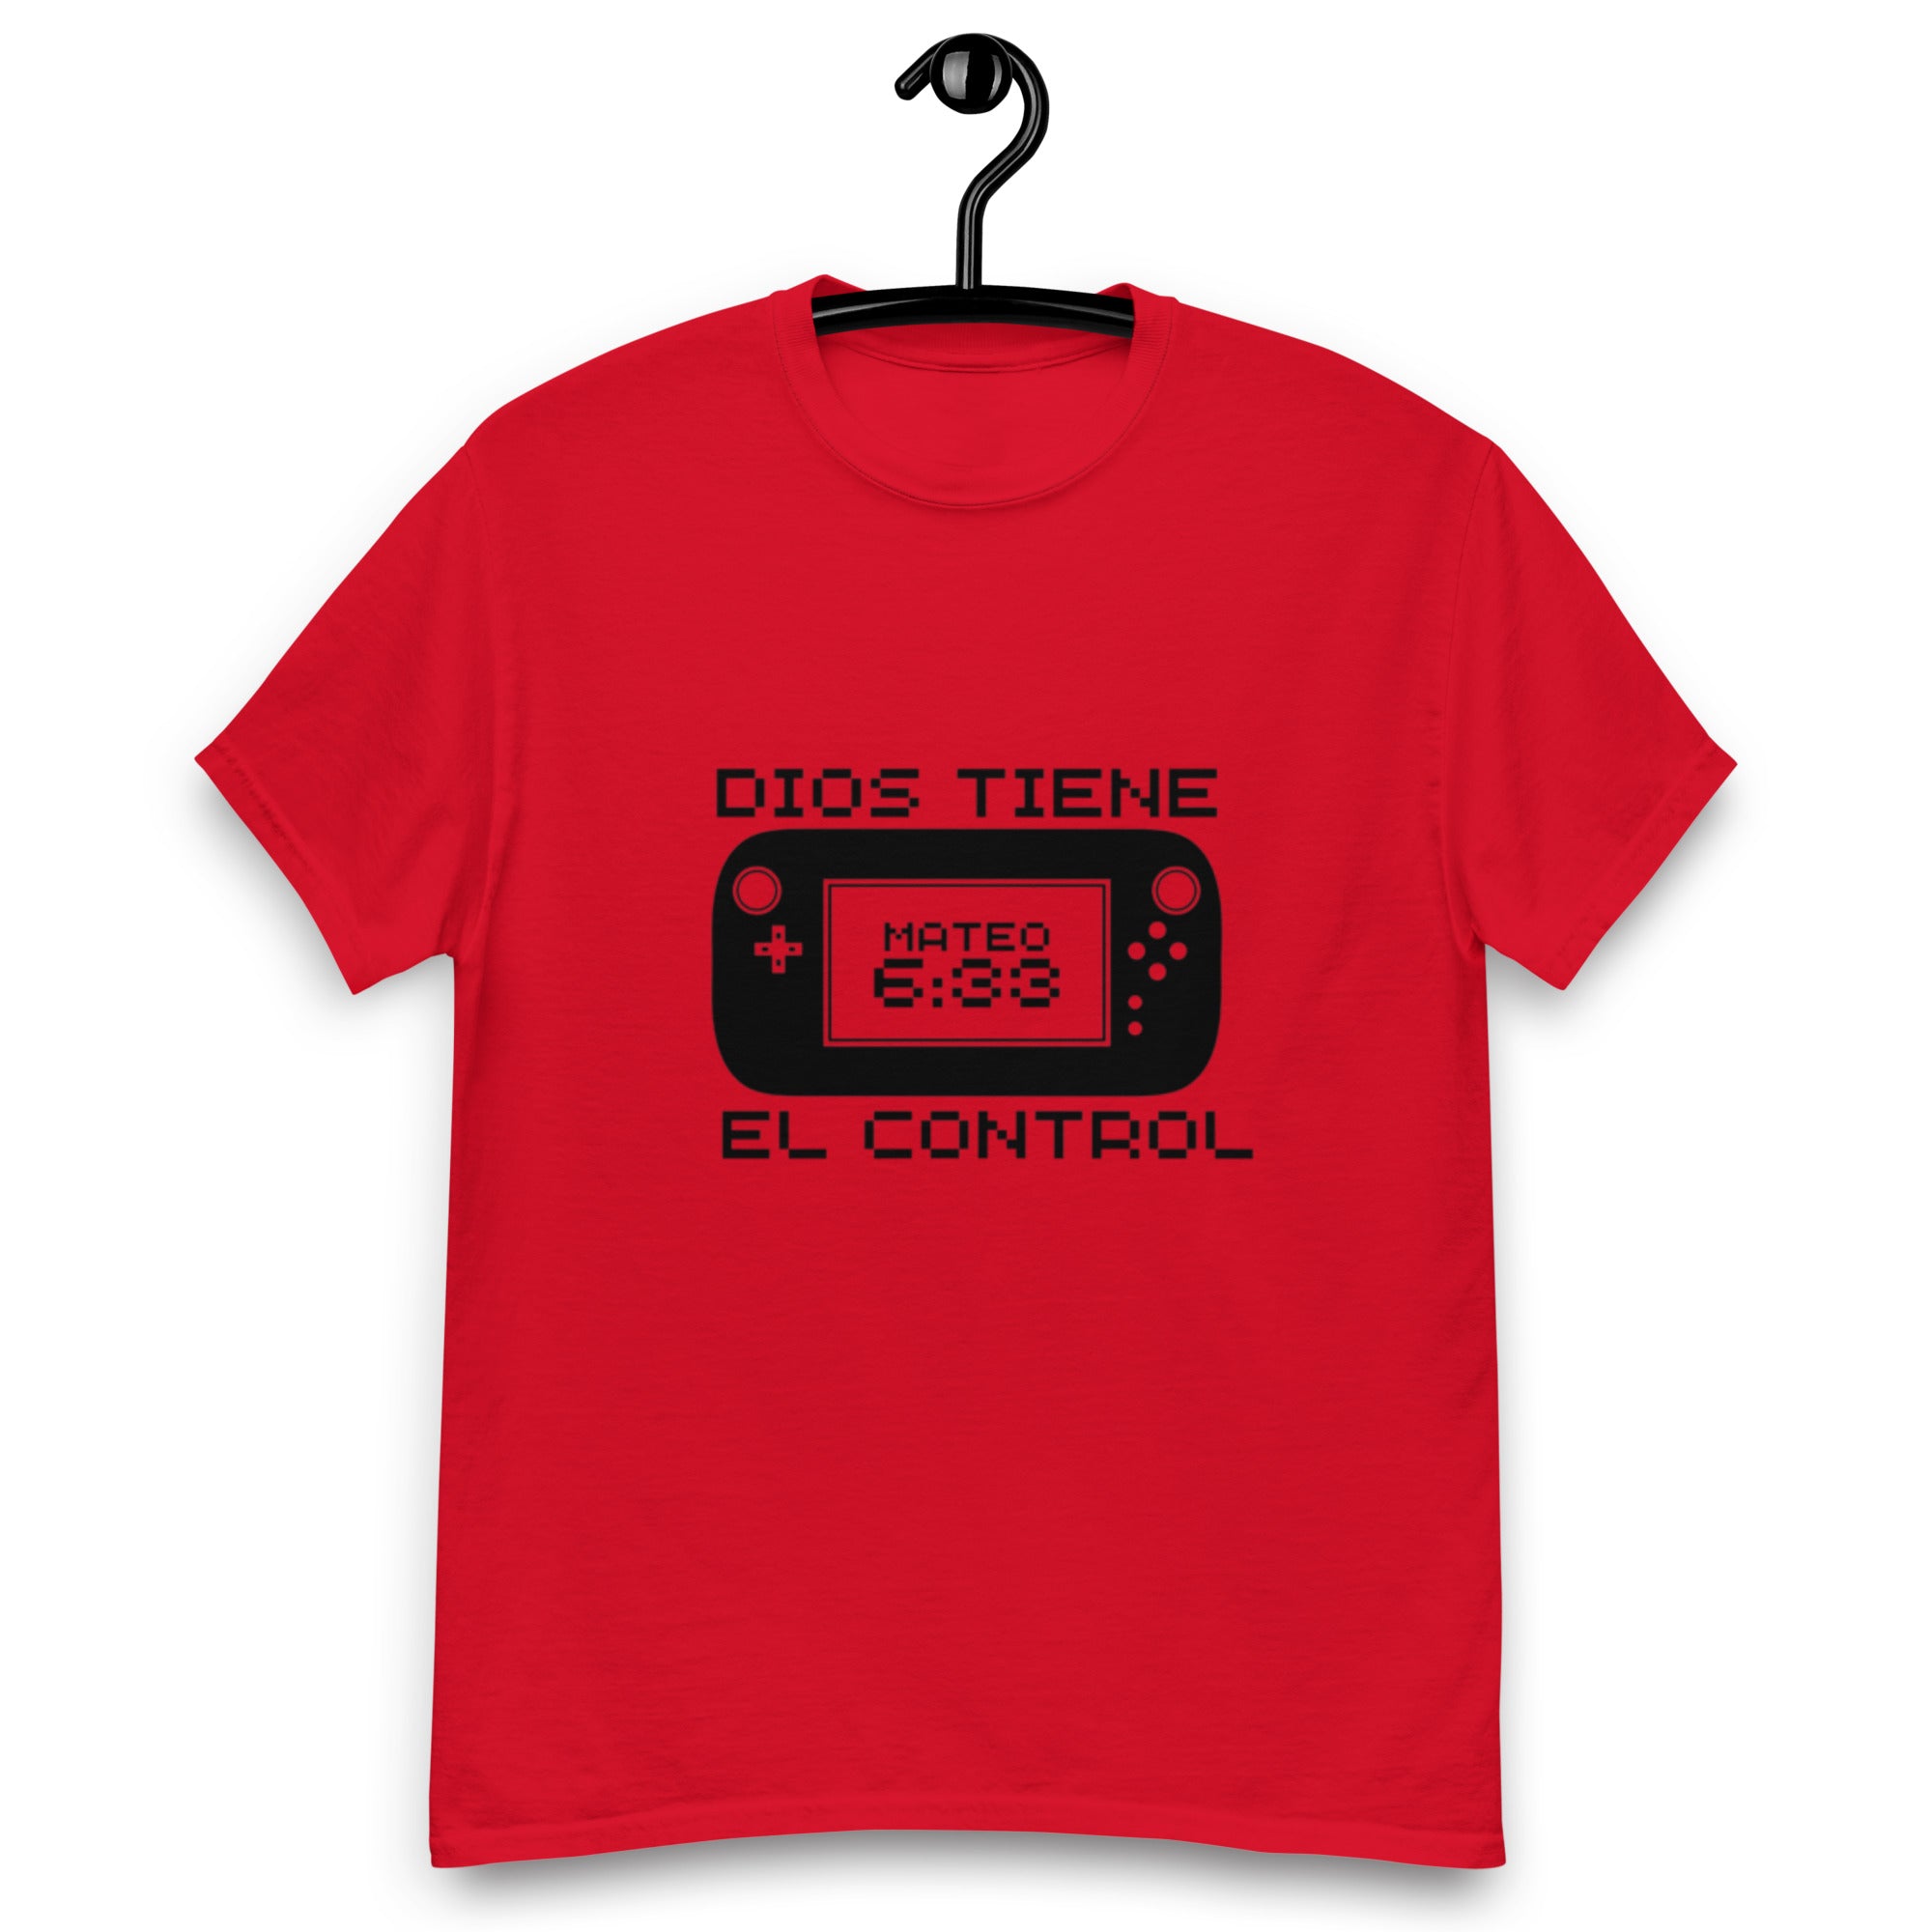 God is in Control, 100% Cotton Christian Shirt / Dios Tiene el Control, Camisa Cristiana 100% Algodon